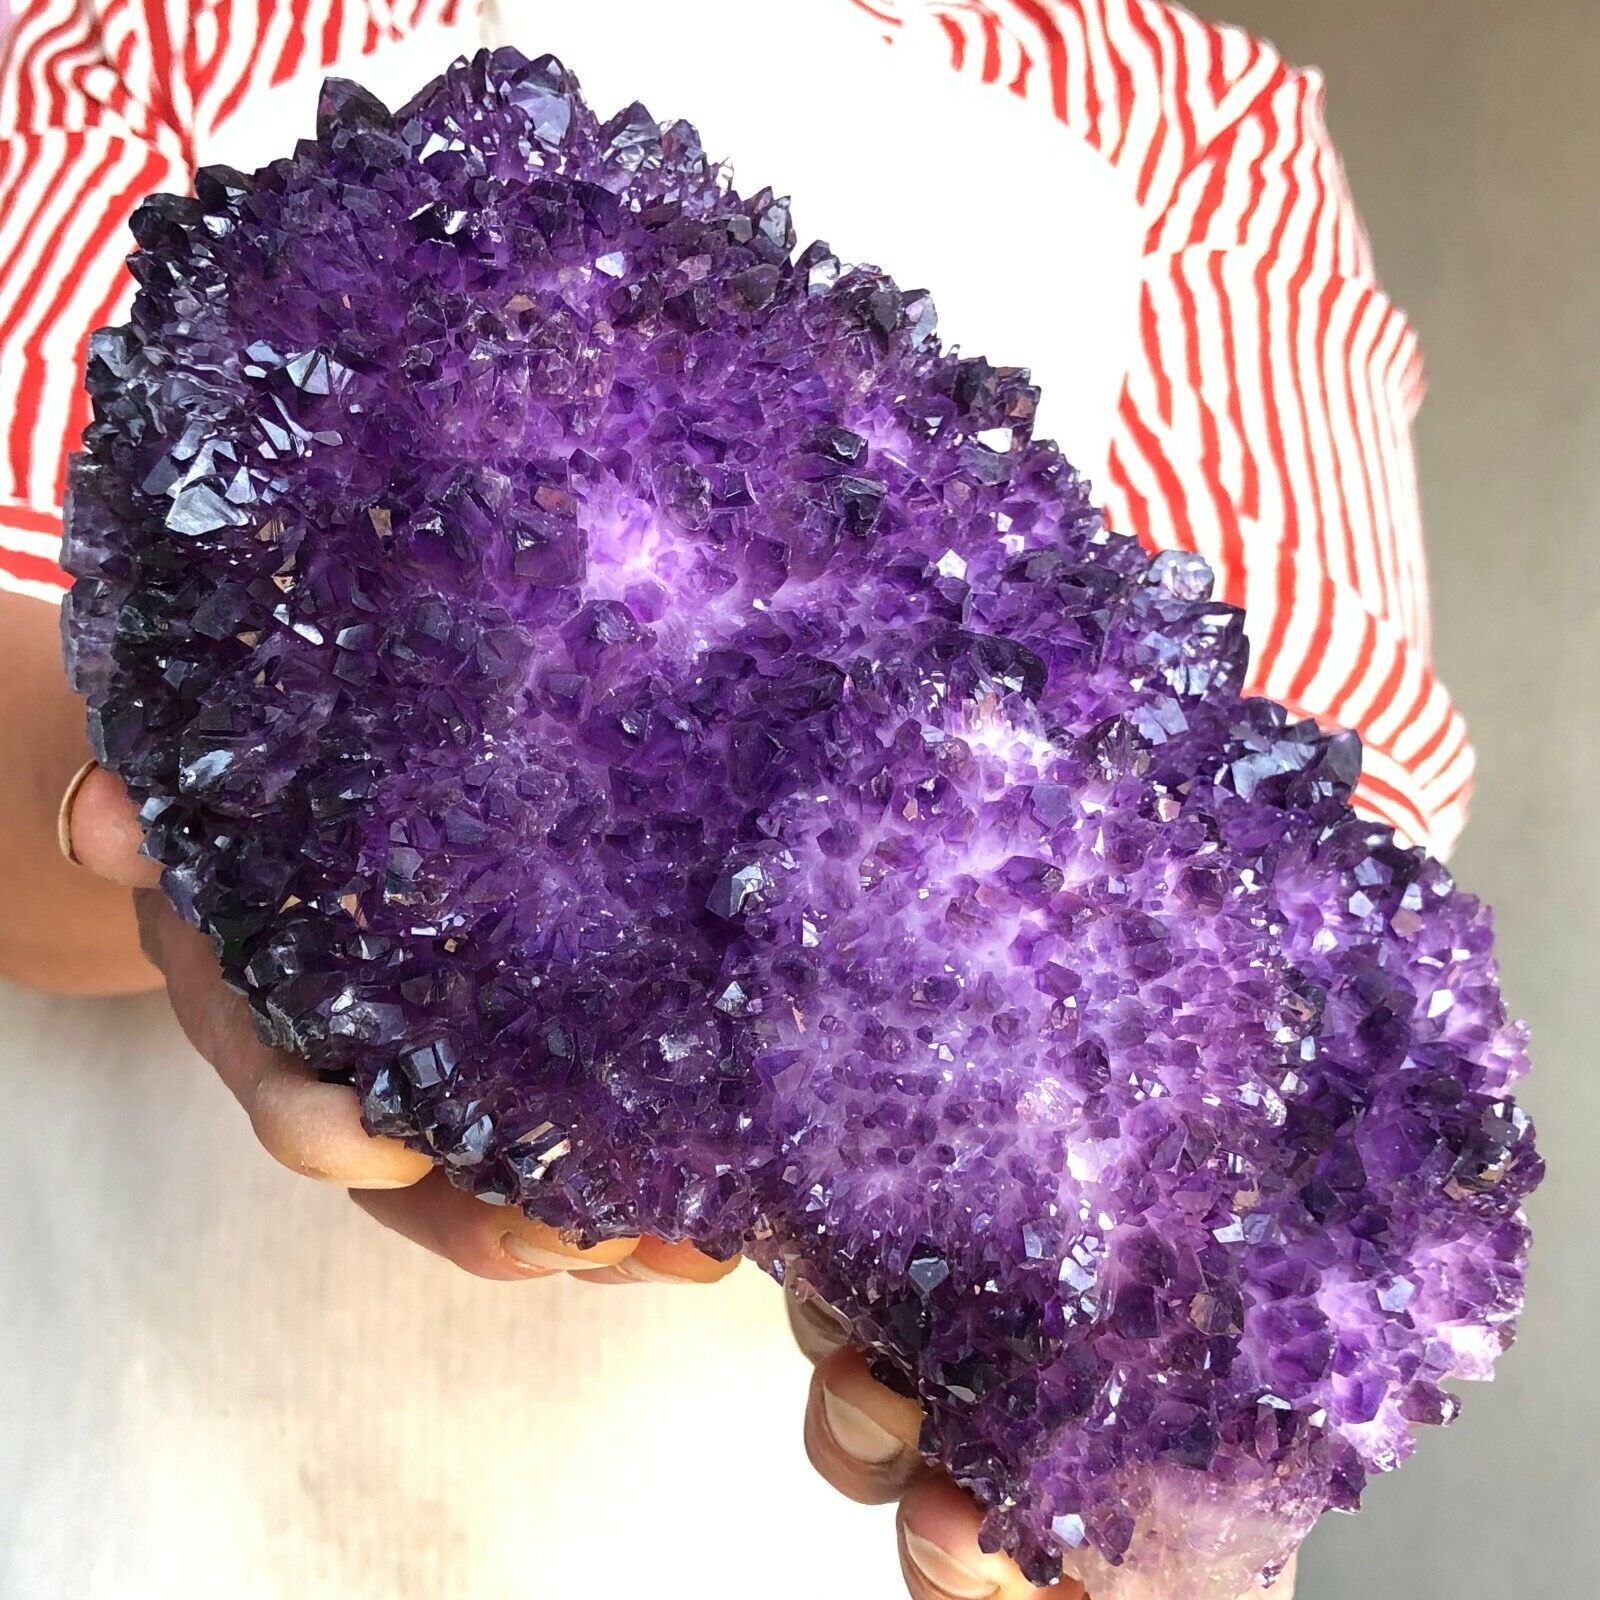 6.4LB Species Restoration of New Purple Quartz Crystal Cluster Discovered K466